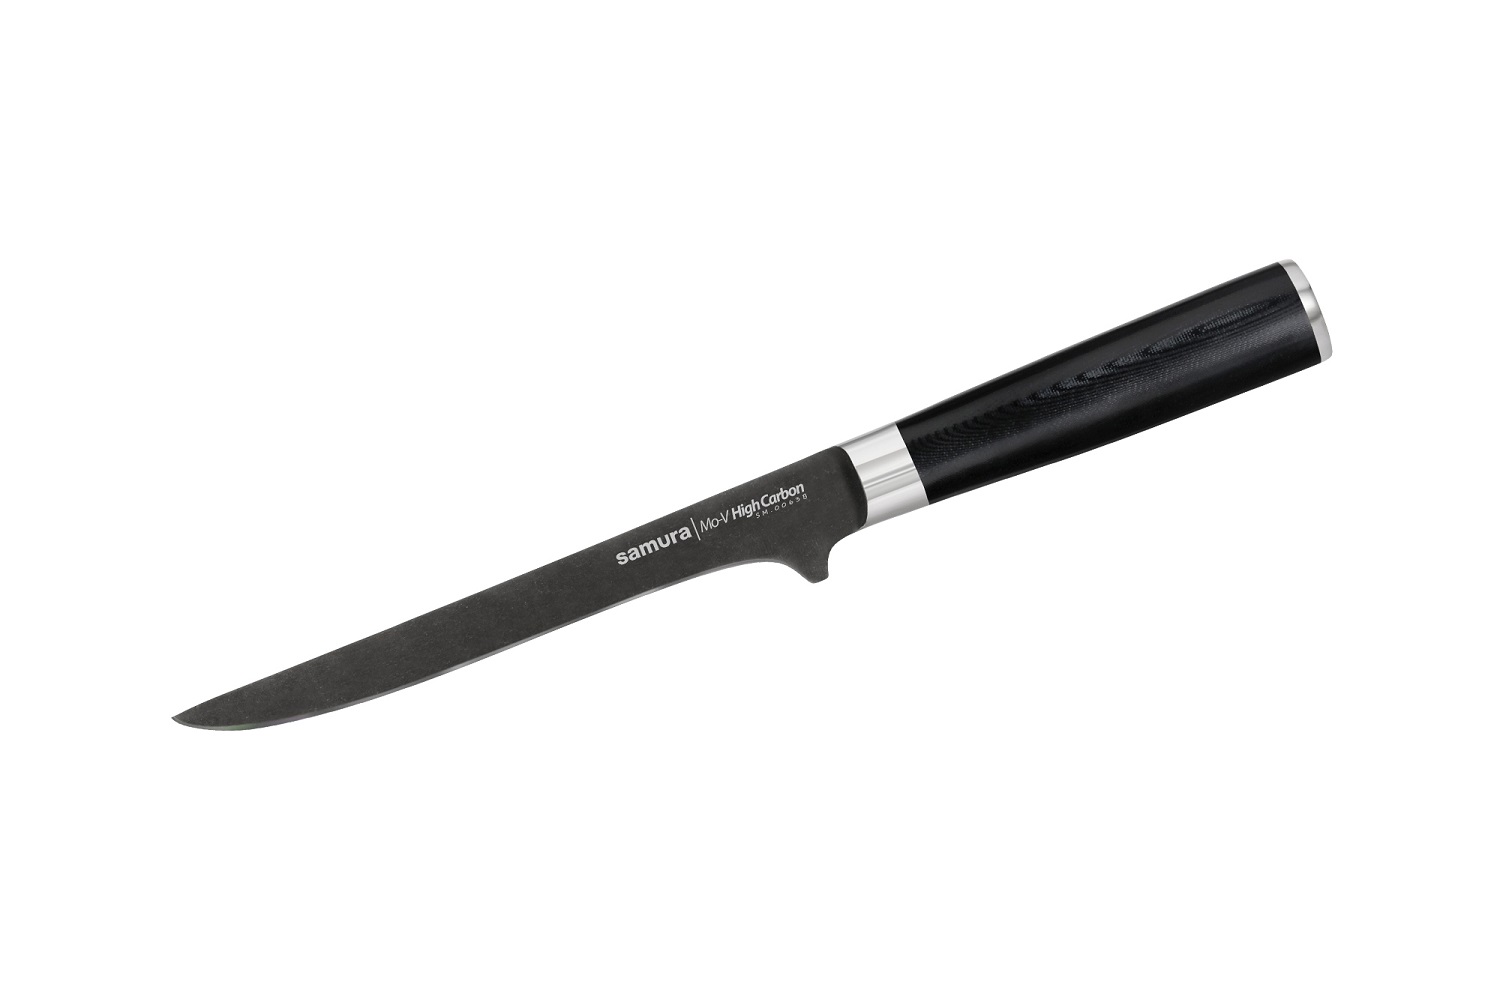 Нож Samura обвалочный Mo-V Stonewash, 16,5 см, G-10 нож samura mo v stonewash шеф 20 см g 10